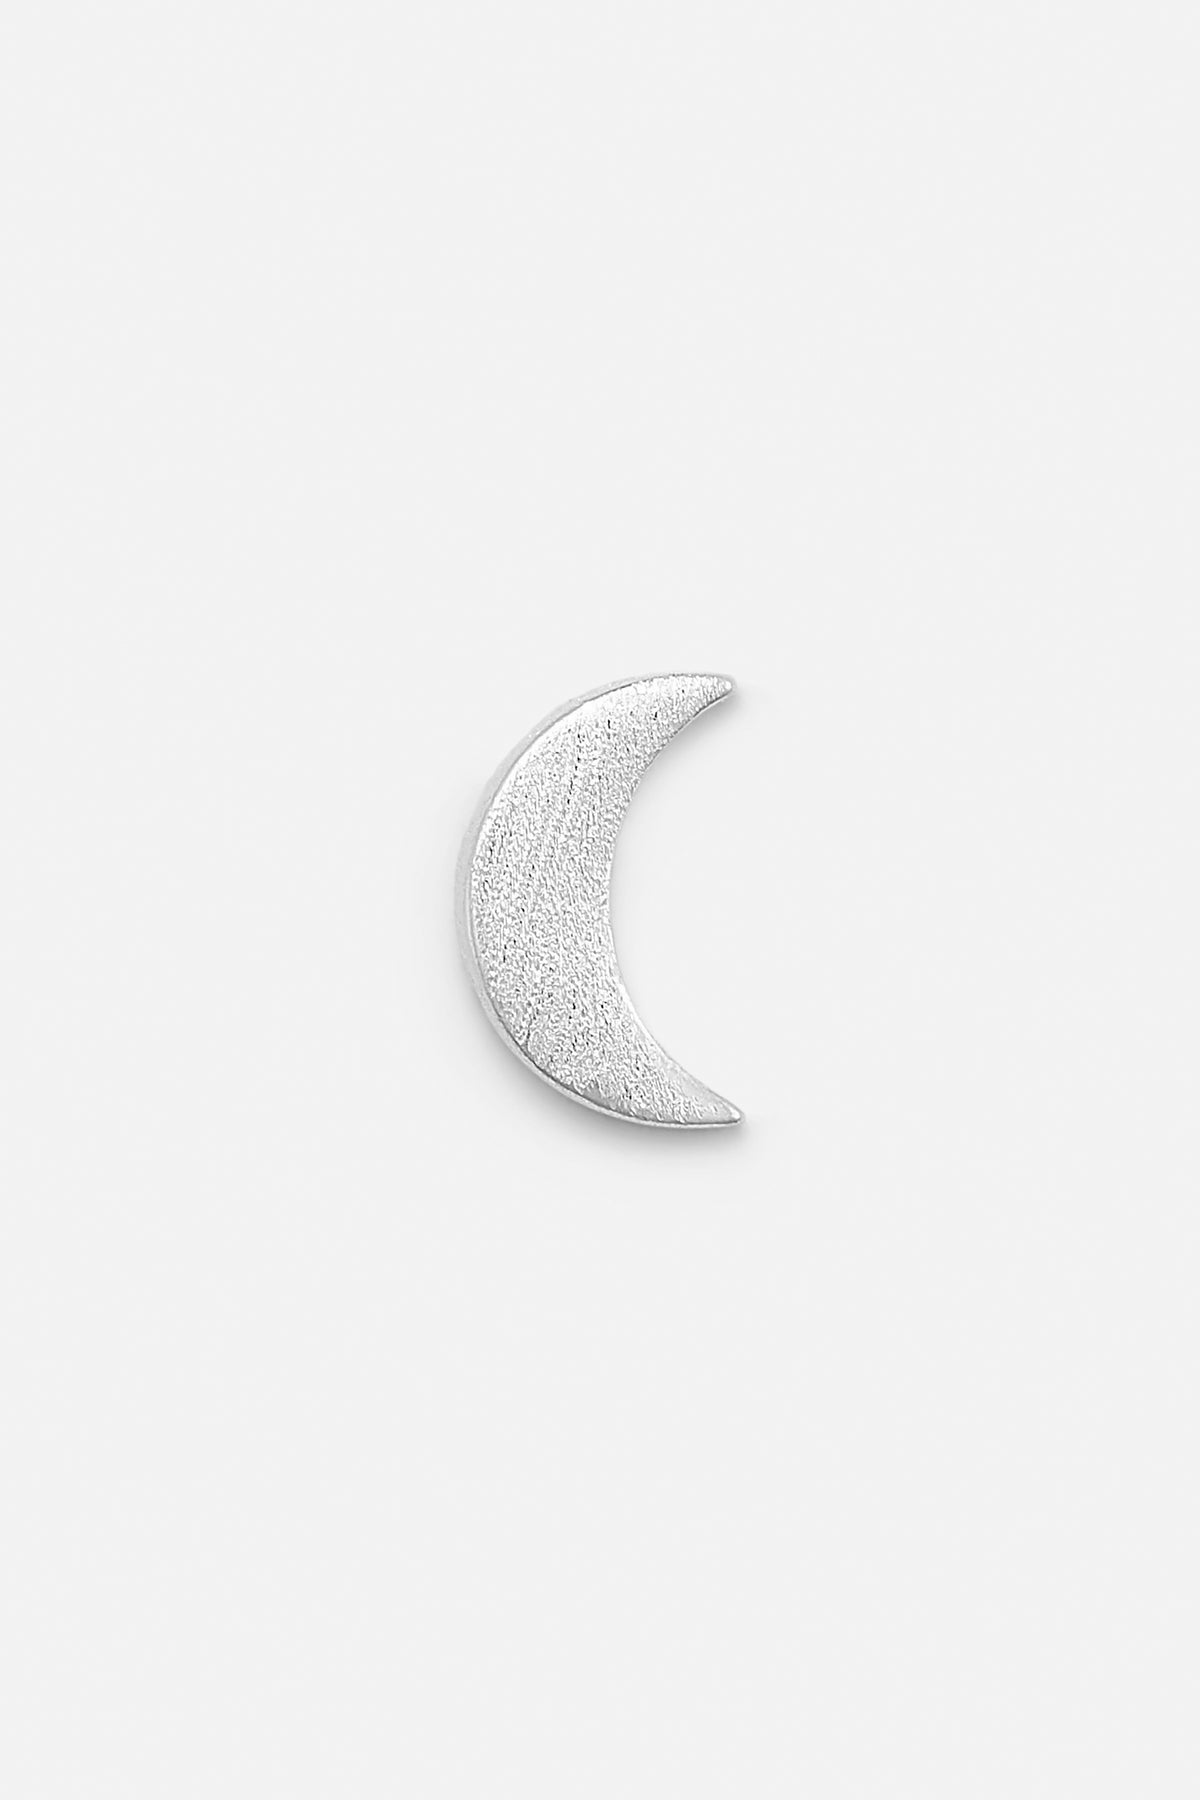 Sorelle ApS Mini Moona Earstick Earring Sterling Silver